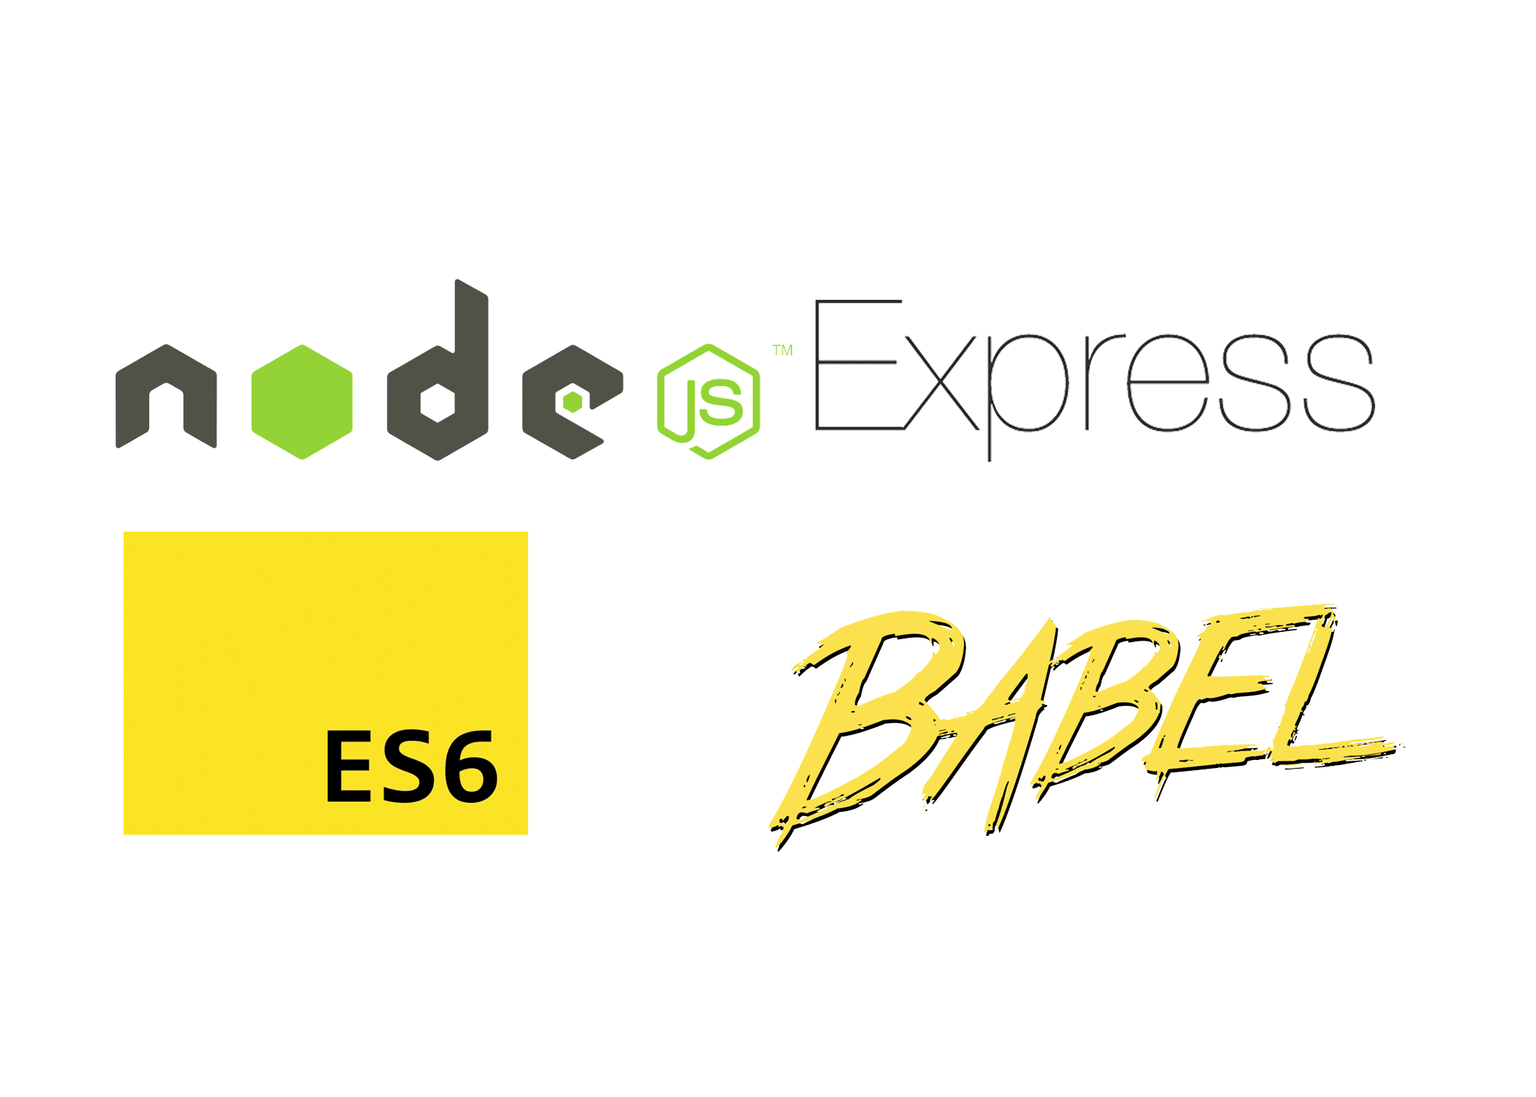 Express, Babel, NodeJS and JavaScript logos